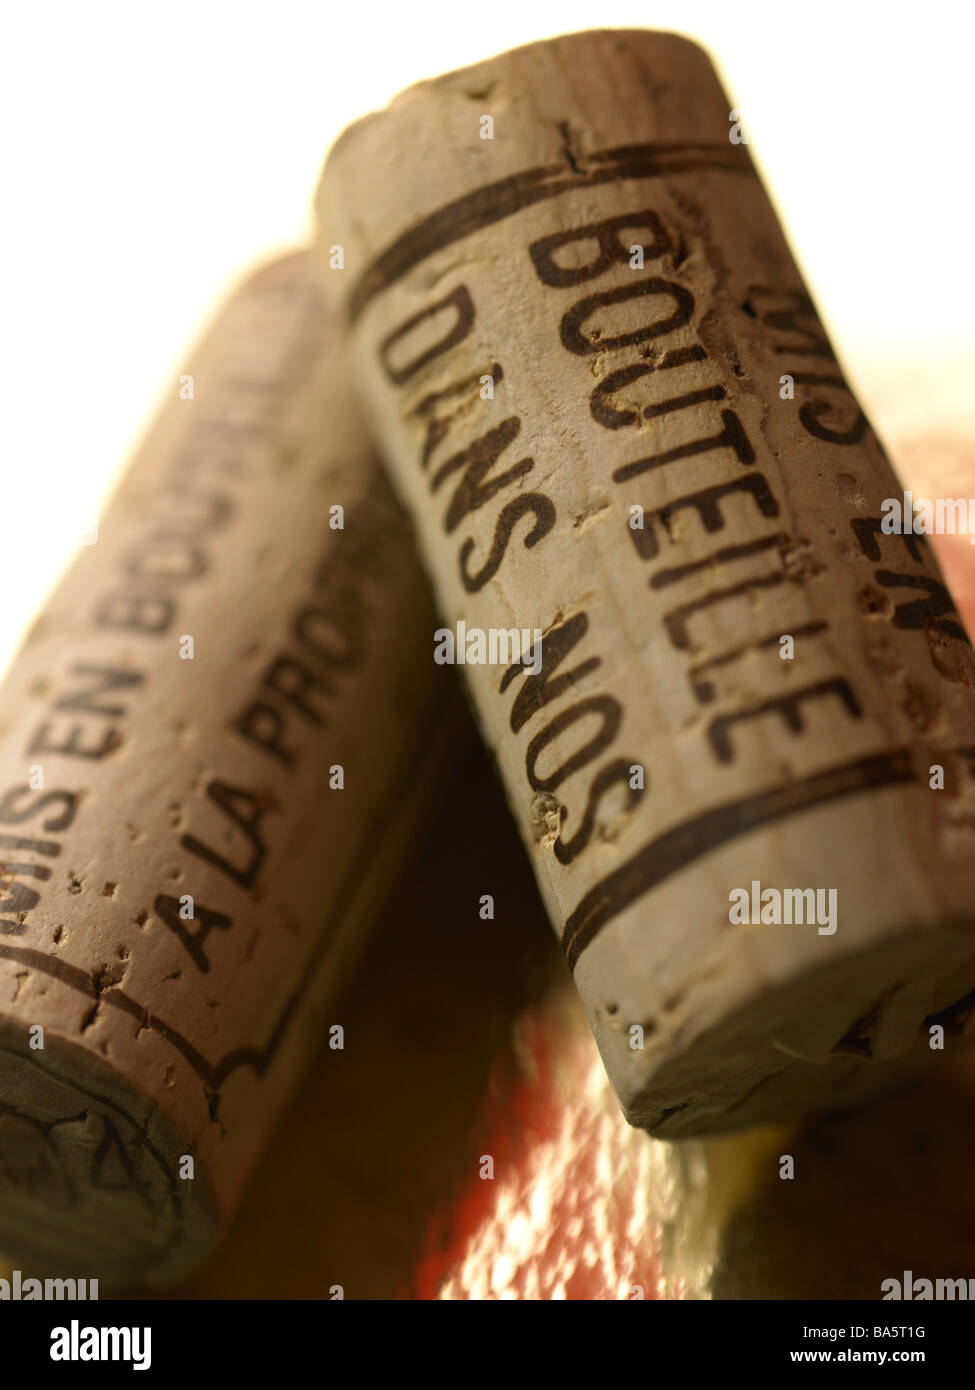 French wine corks Stock Photo